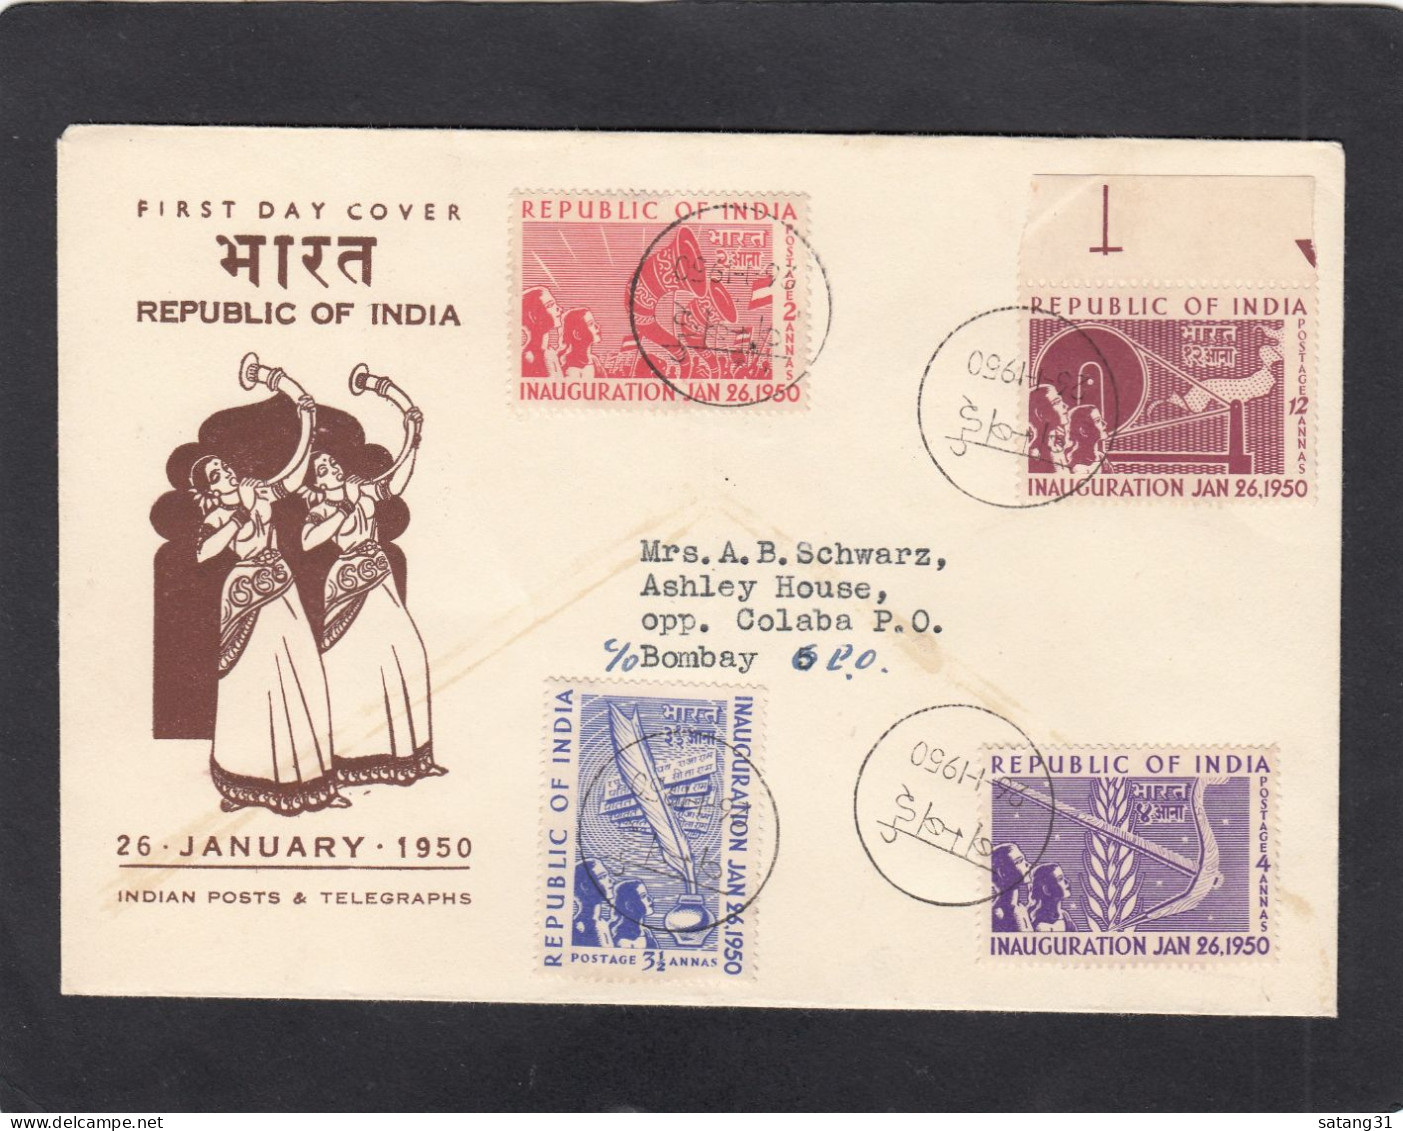 FDC.INAUGURATION OF THE REPUBLIK OF INDIA, 26 JANUARY 1950. - FDC